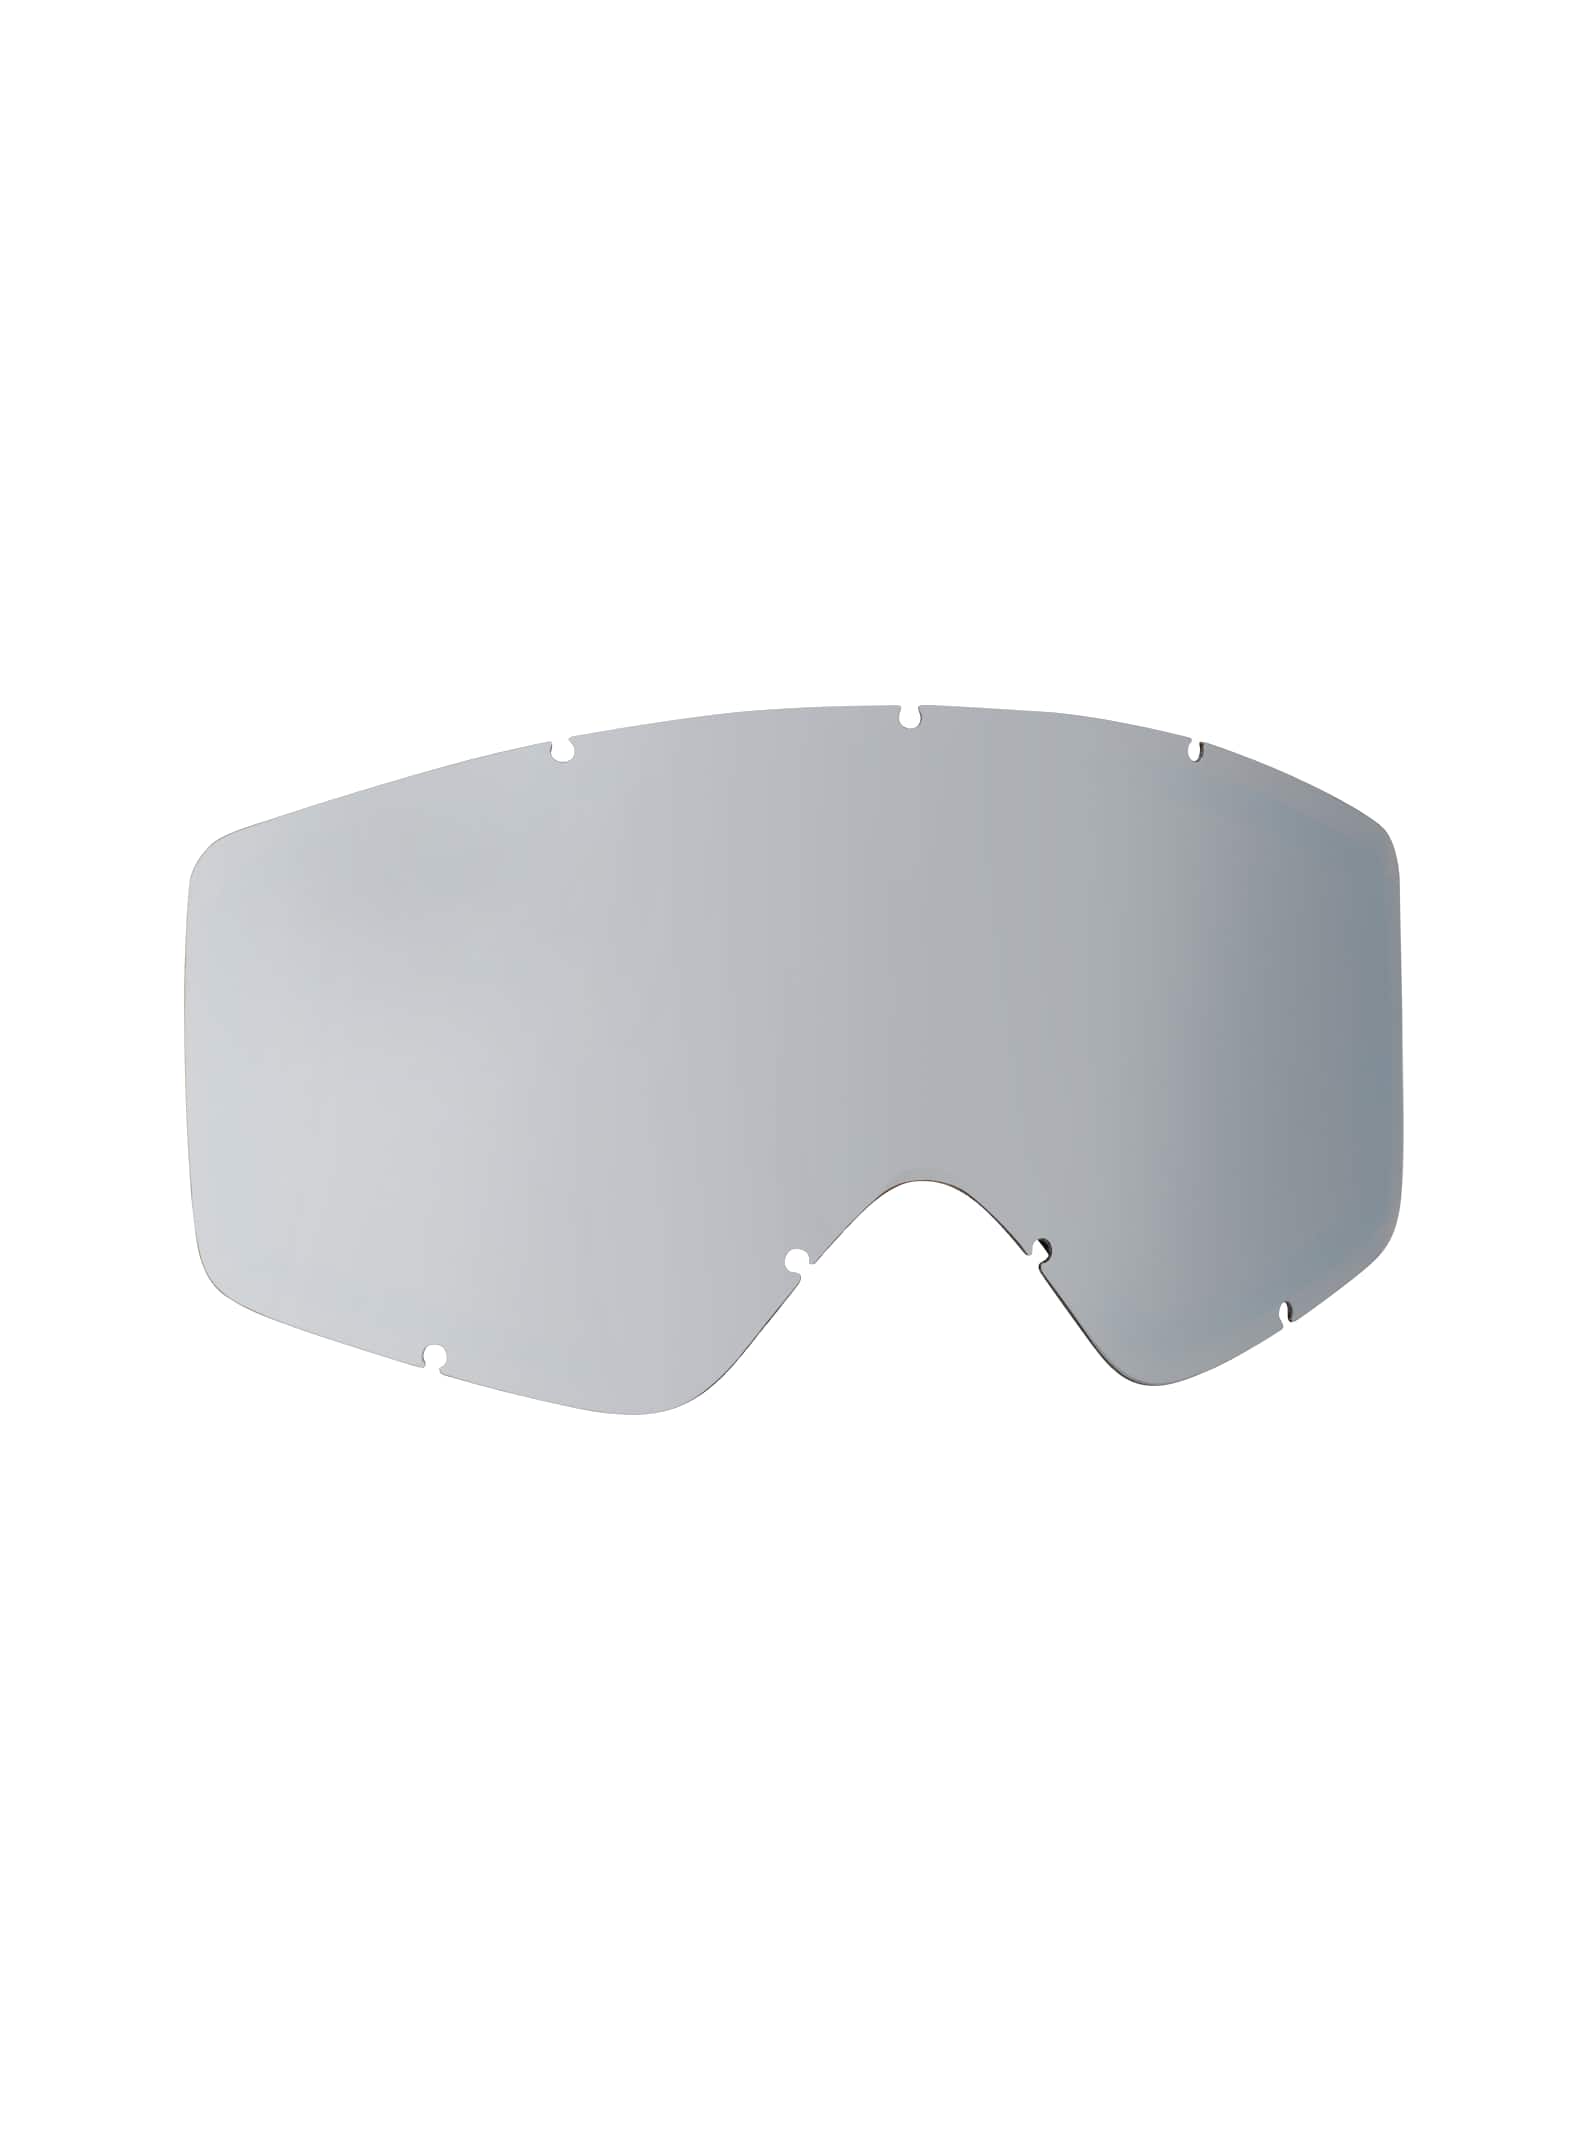 Anon Helix 2.0 Goggle Lens | Anon Optics Winter 2023 AT